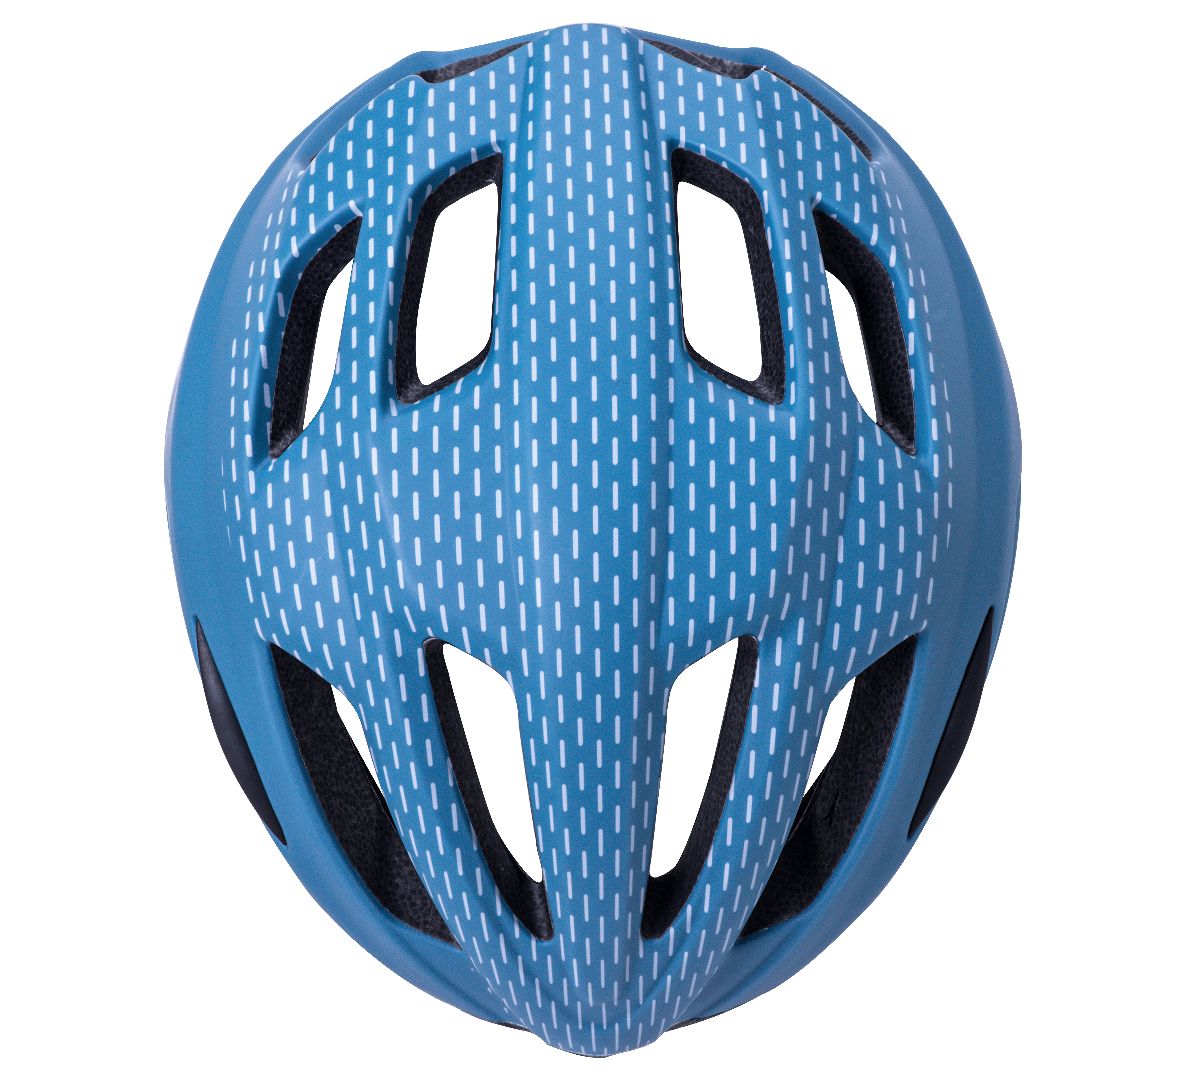 Kali Protectives Prime Road Bike Helmet (S – XL)